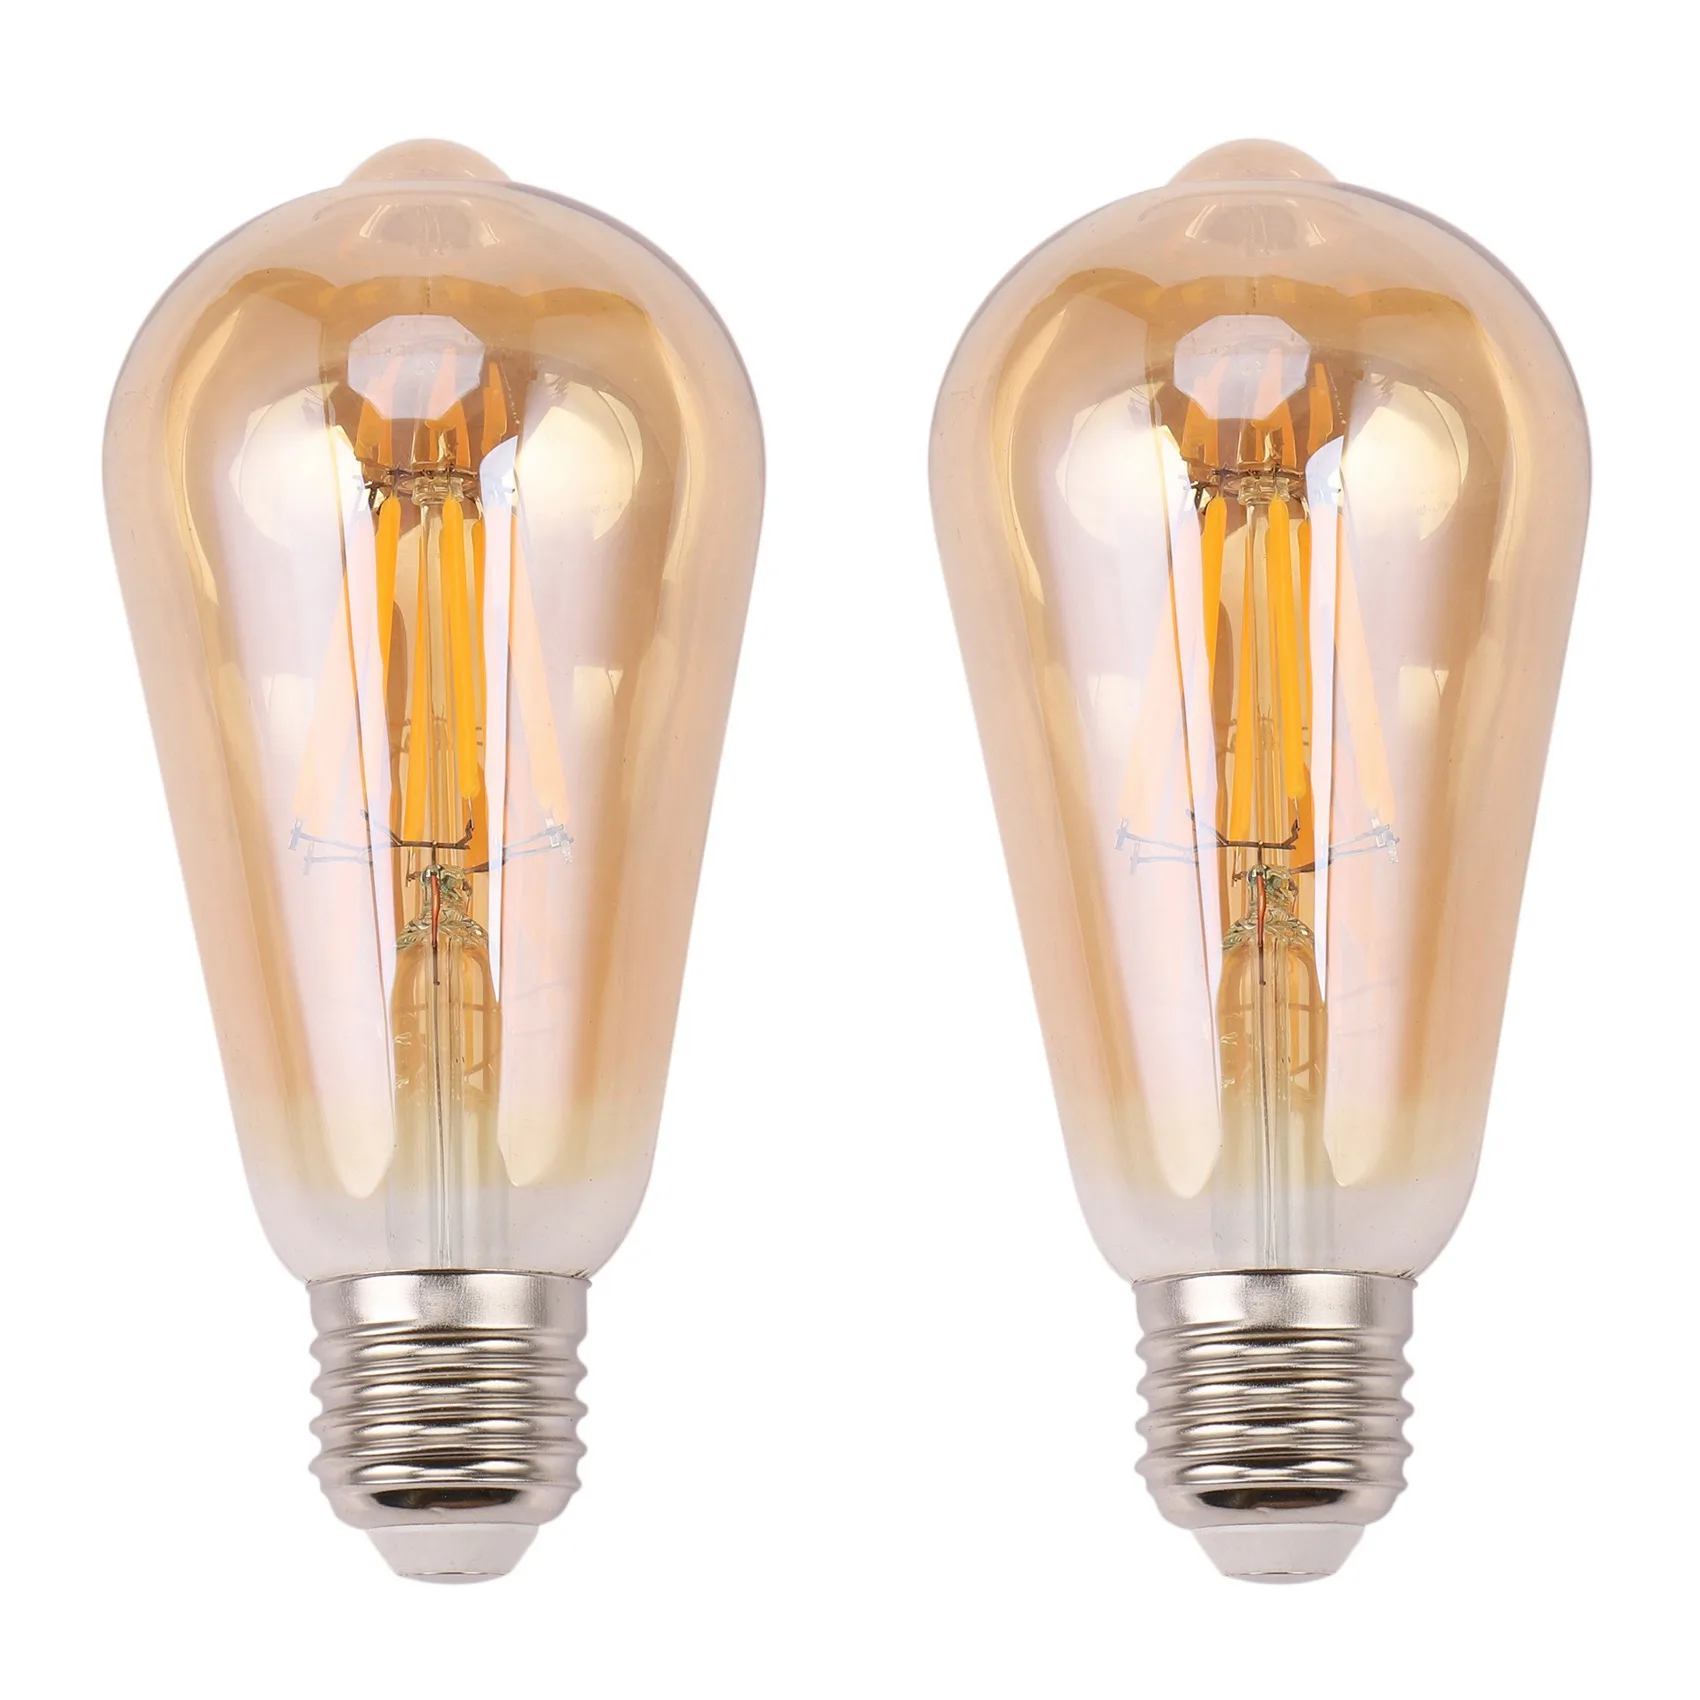 2X Dimmable E27 8W Edison Retro Vintage Filament ST64 COB LED Bulb Light Lamp Body Color:Golden Cover